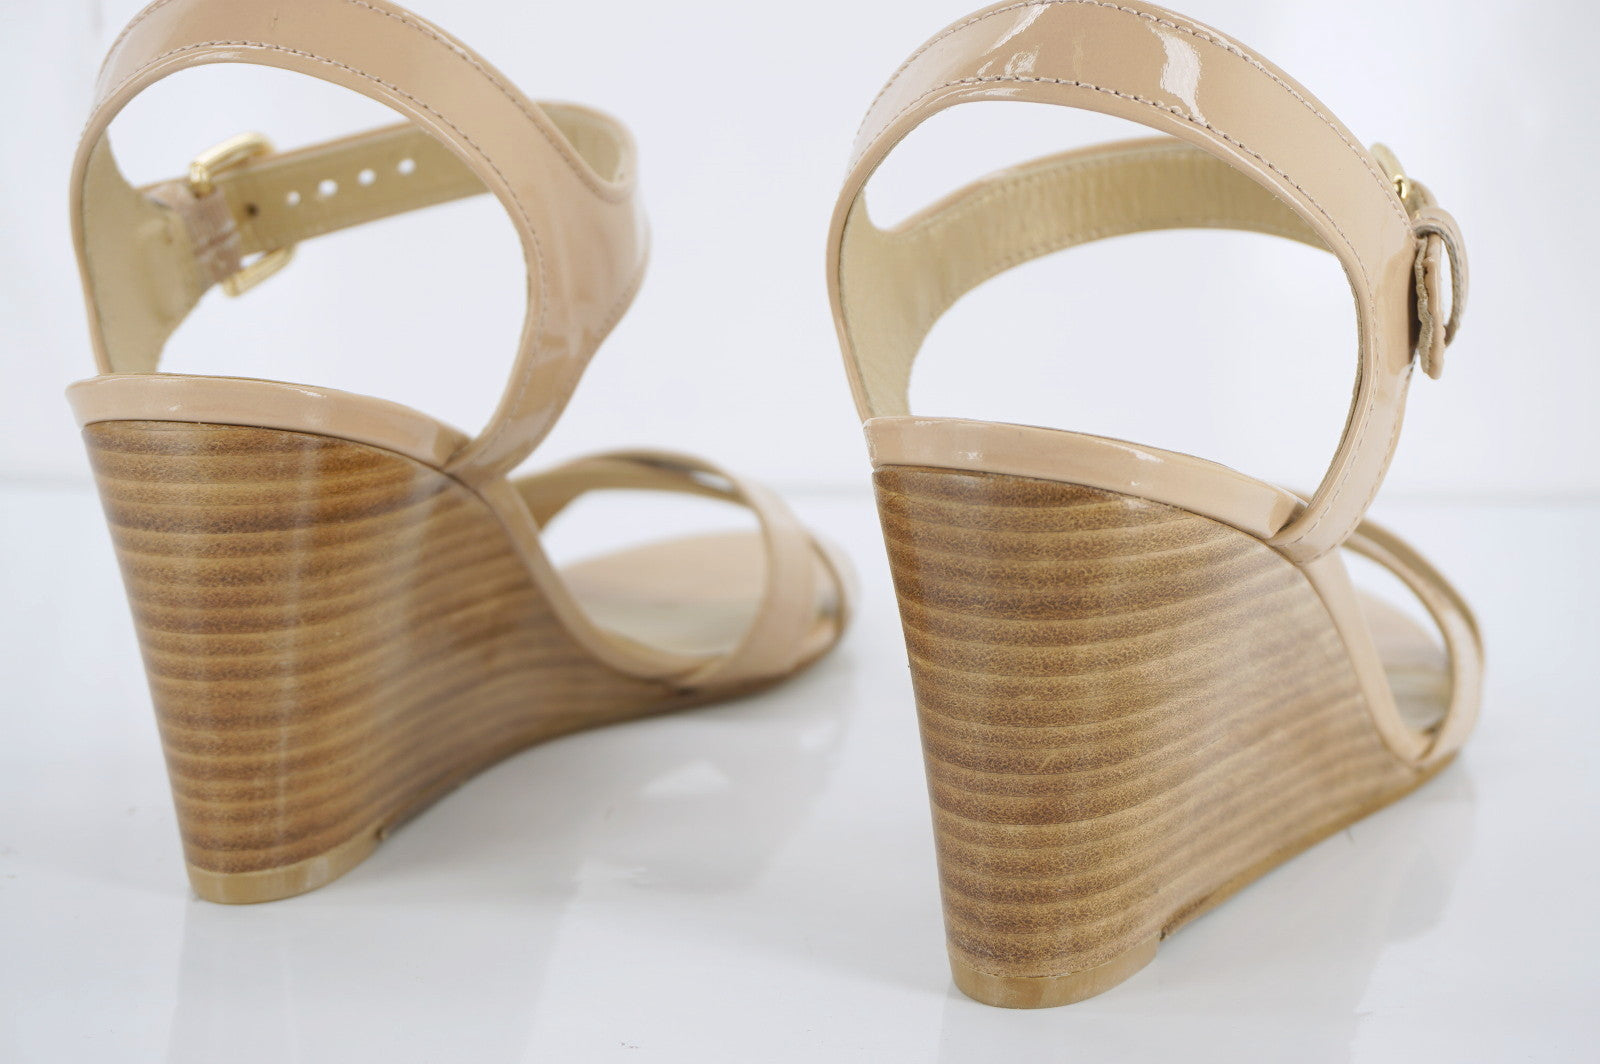 Stuart Weitzman 'Next Wedge' Nude Patent Sandal size 11 New strappy NIB $365